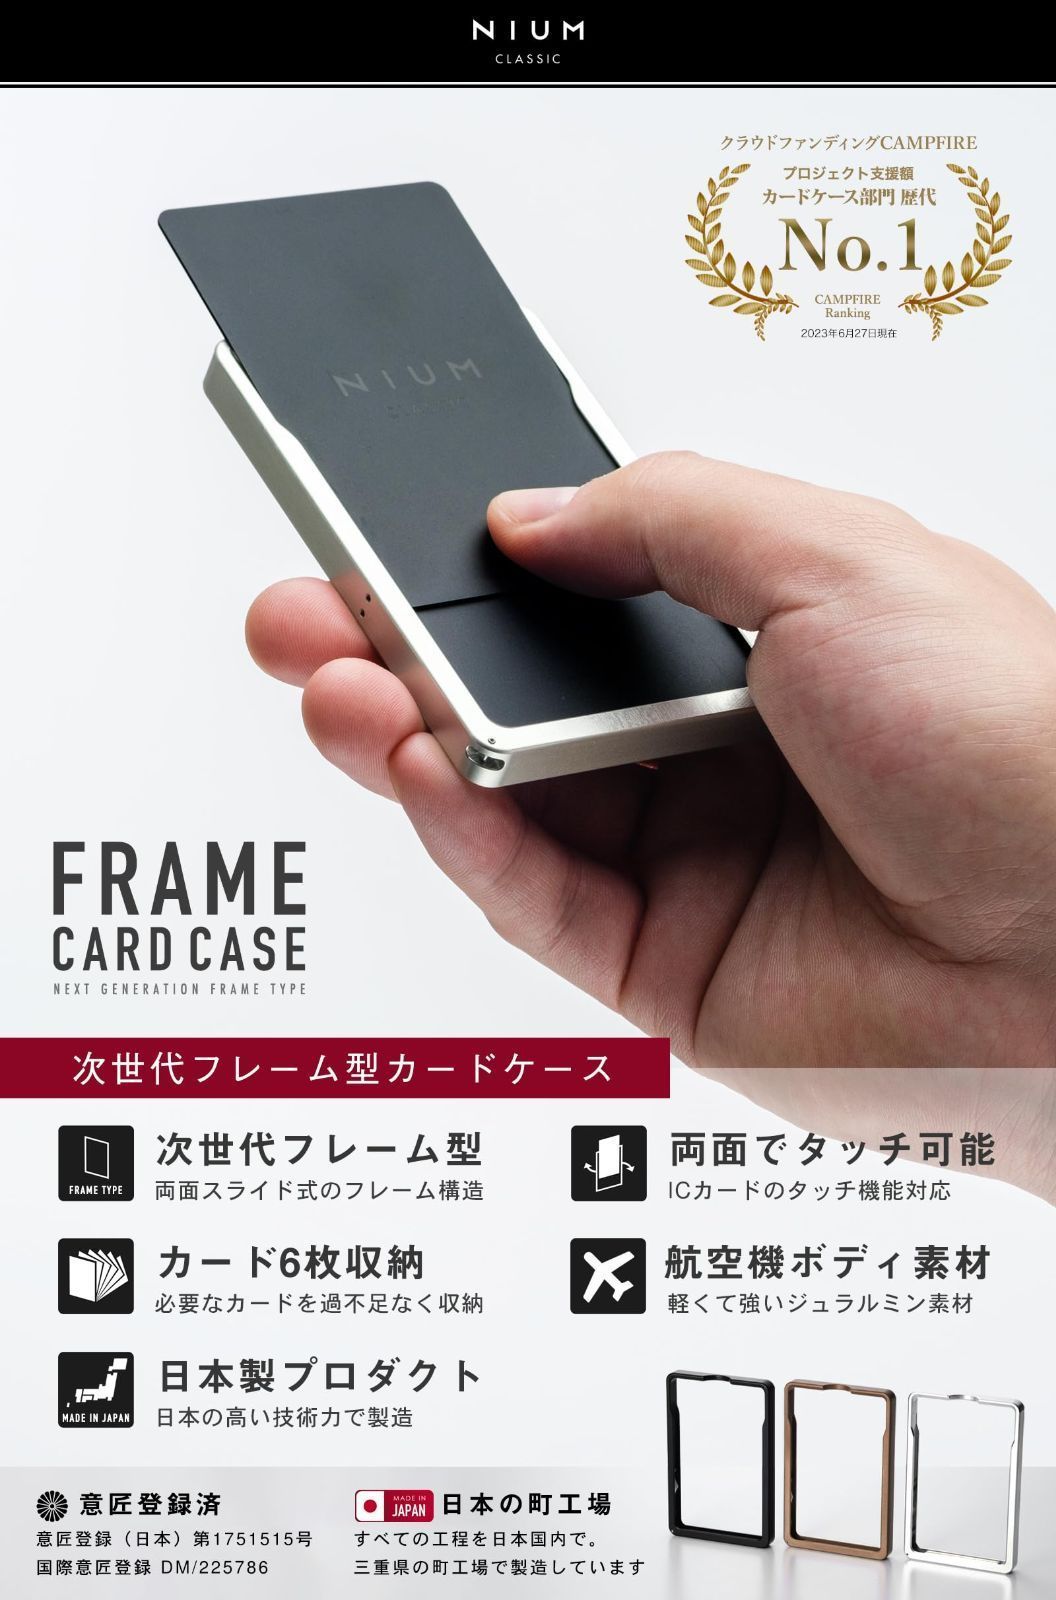 NIUM CLASSIC フレーム型 カードケース タッチ決済対応 ジュラルミン削り出し メンズ 薄型 薄い スリム 日本製 パスケース  クレジットカードケース 定期入れ 定期ケース メタル アルミ カード入れ カード ケース idカードケース icカード カードホルダー ギフト  プレゼント